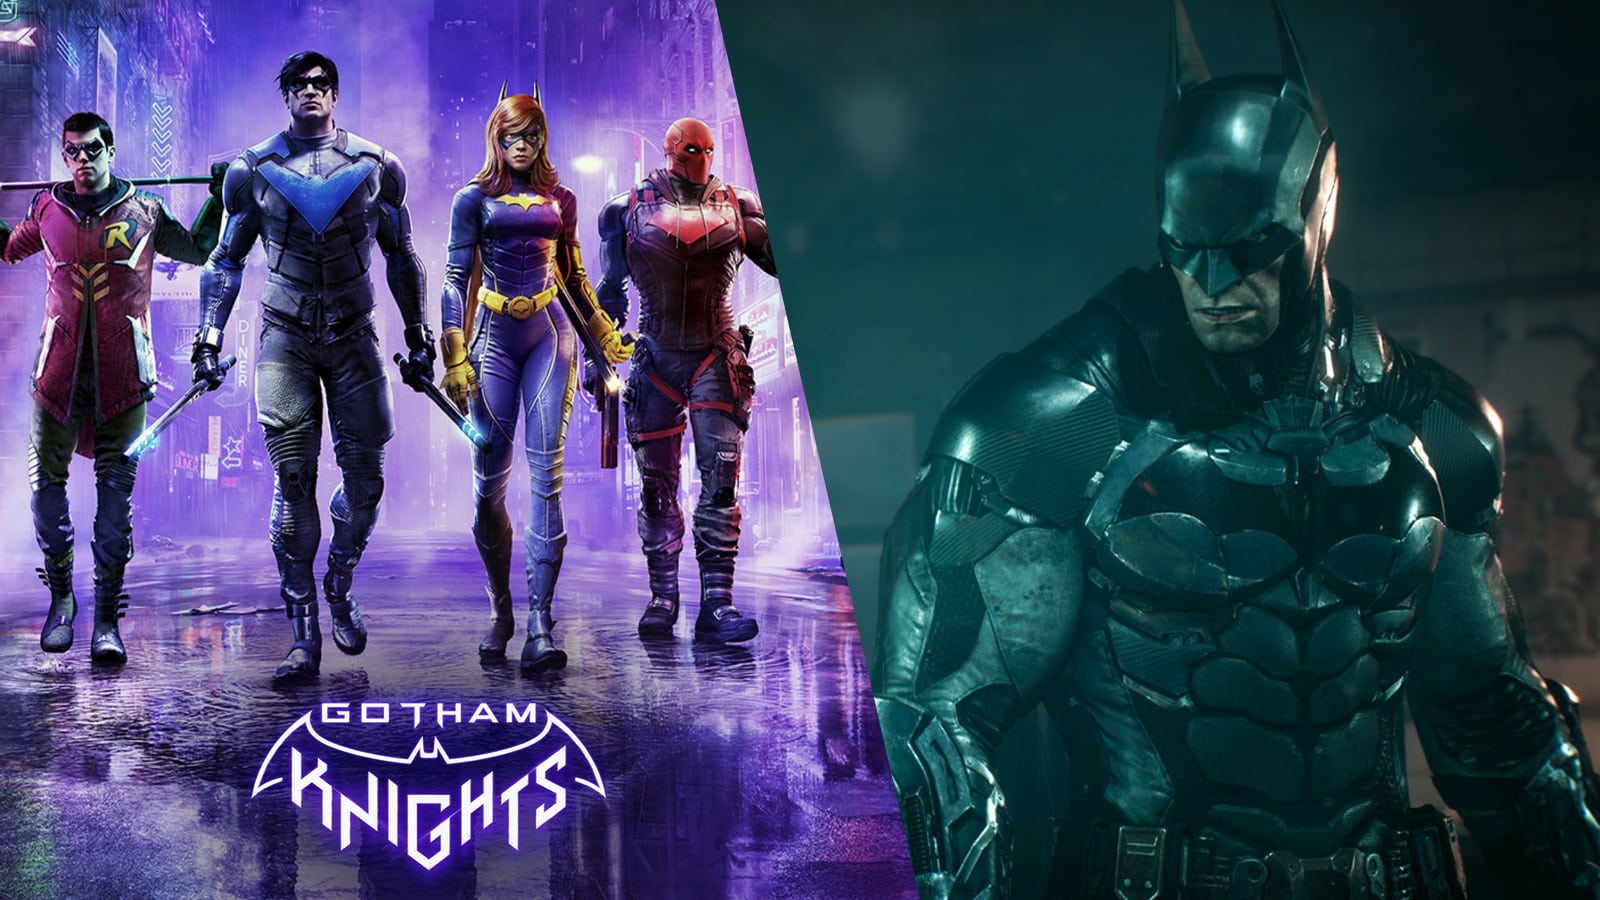 Is Gotham Knights a Sequel in the Batman: Arkham Knight Universe?